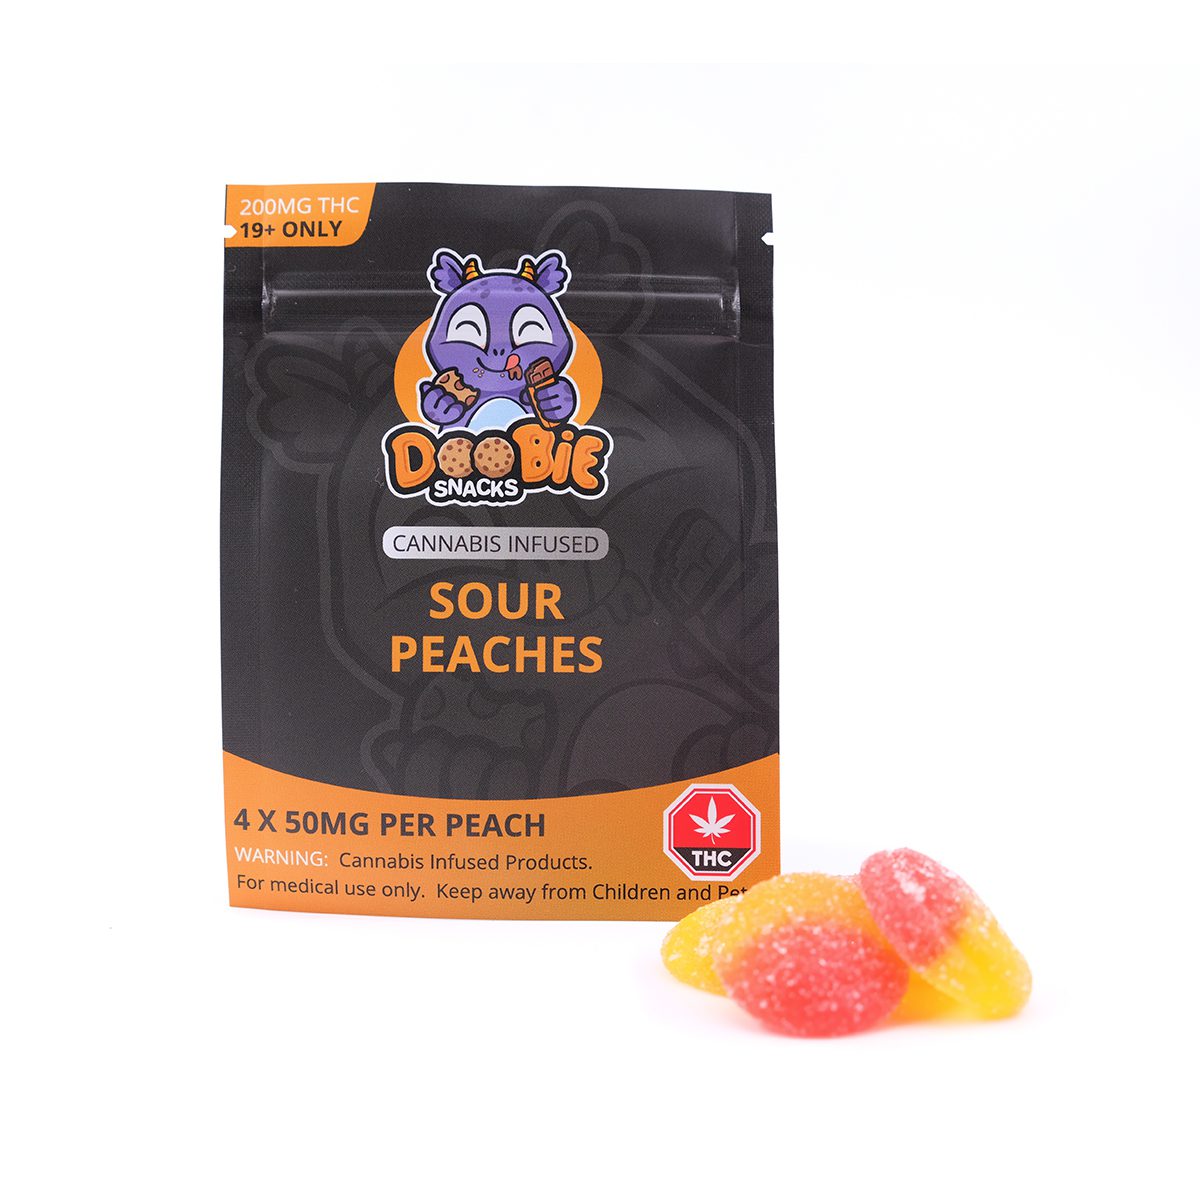 Sour-Peaches-200MG-THC-By-Doobie-Snacks